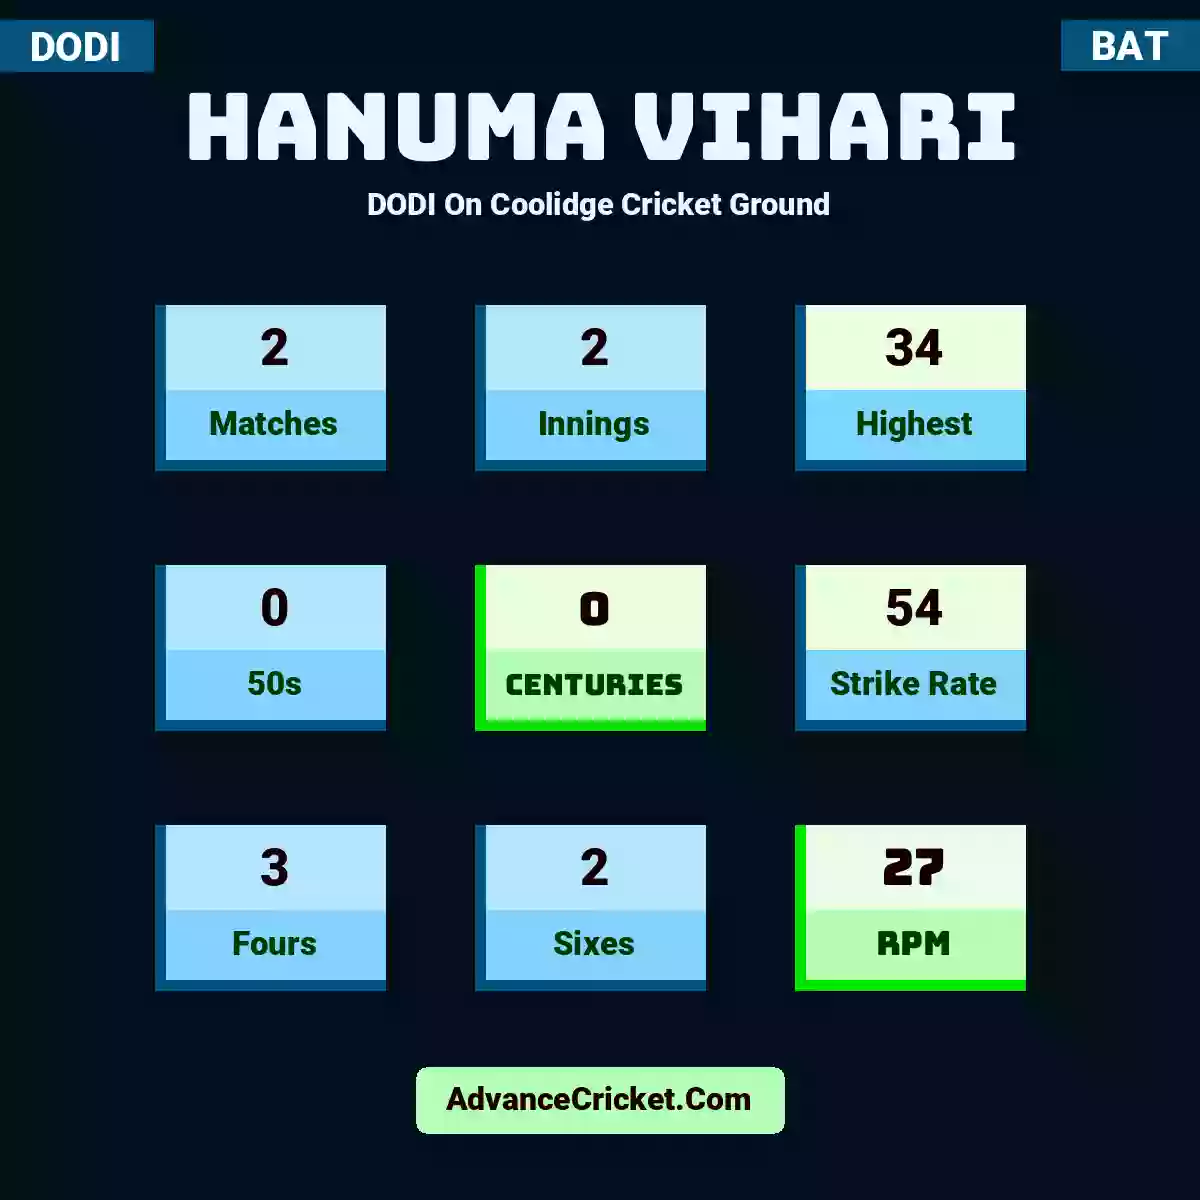 Hanuma Vihari DODI  On Coolidge Cricket Ground, Hanuma Vihari played 2 matches, scored 34 runs as highest, 0 half-centuries, and 0 centuries, with a strike rate of 54. H.Vihari hit 3 fours and 2 sixes, with an RPM of 27.